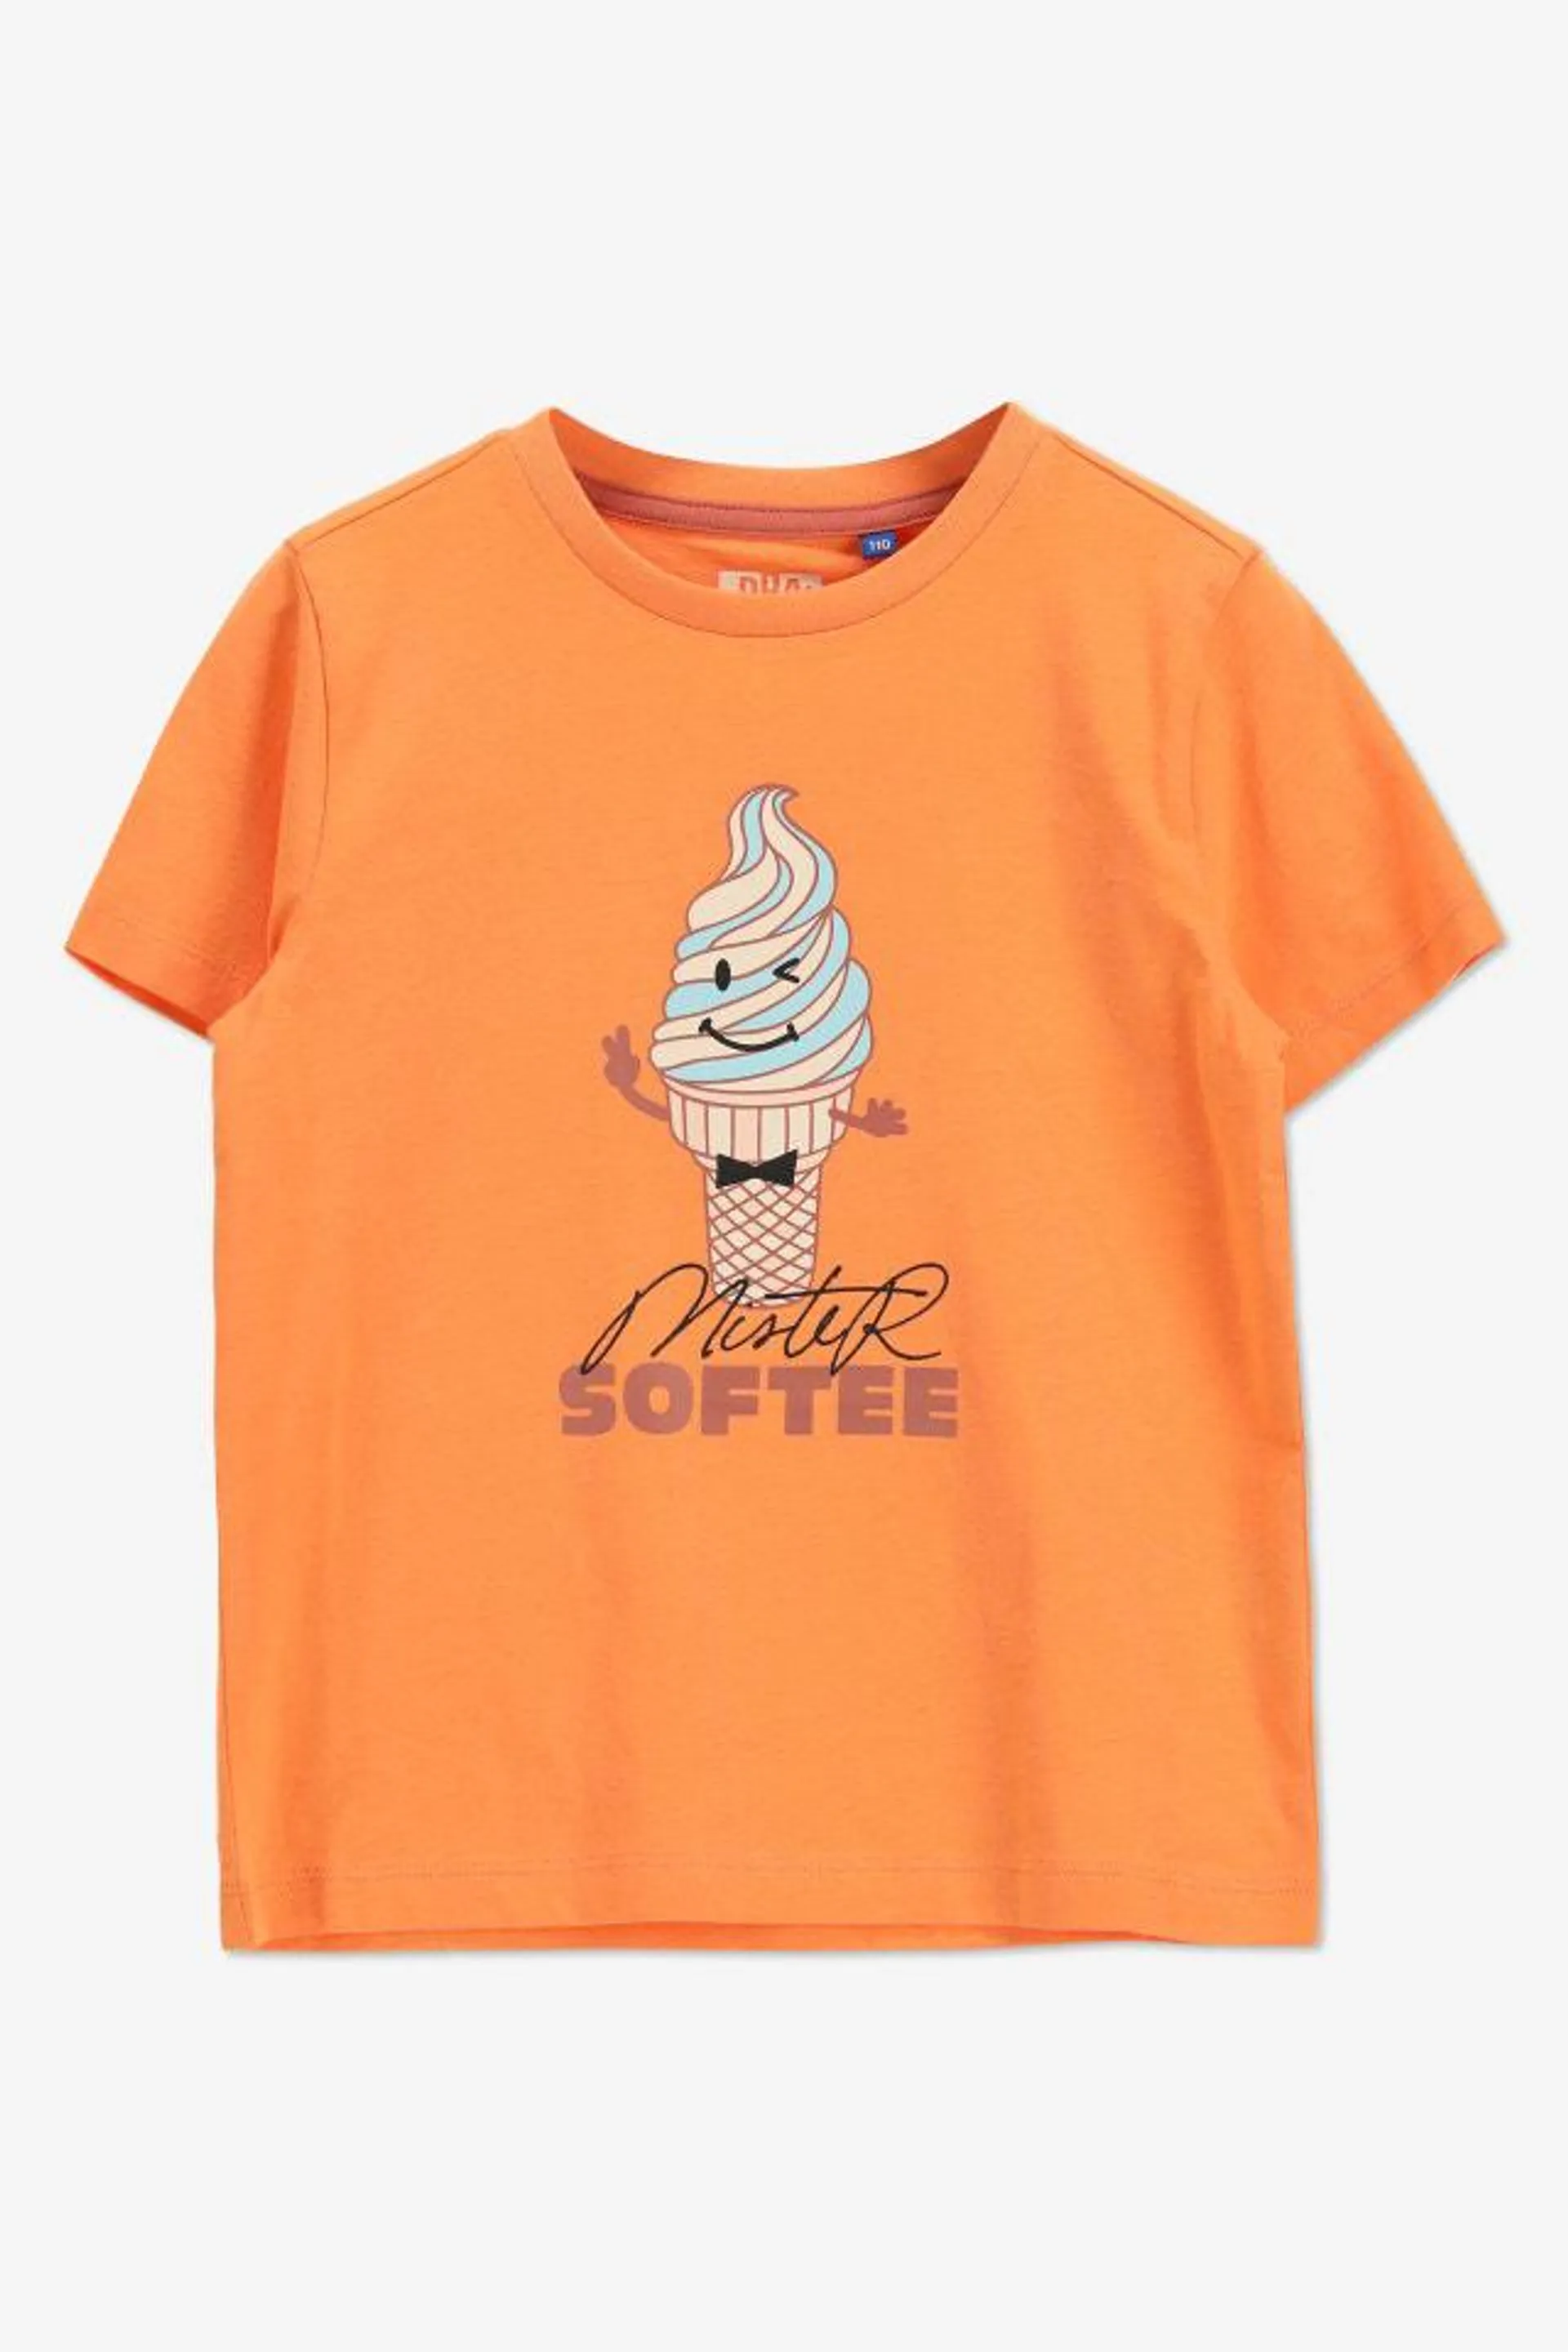 Oranje T-shirt met print "Mister Softee"